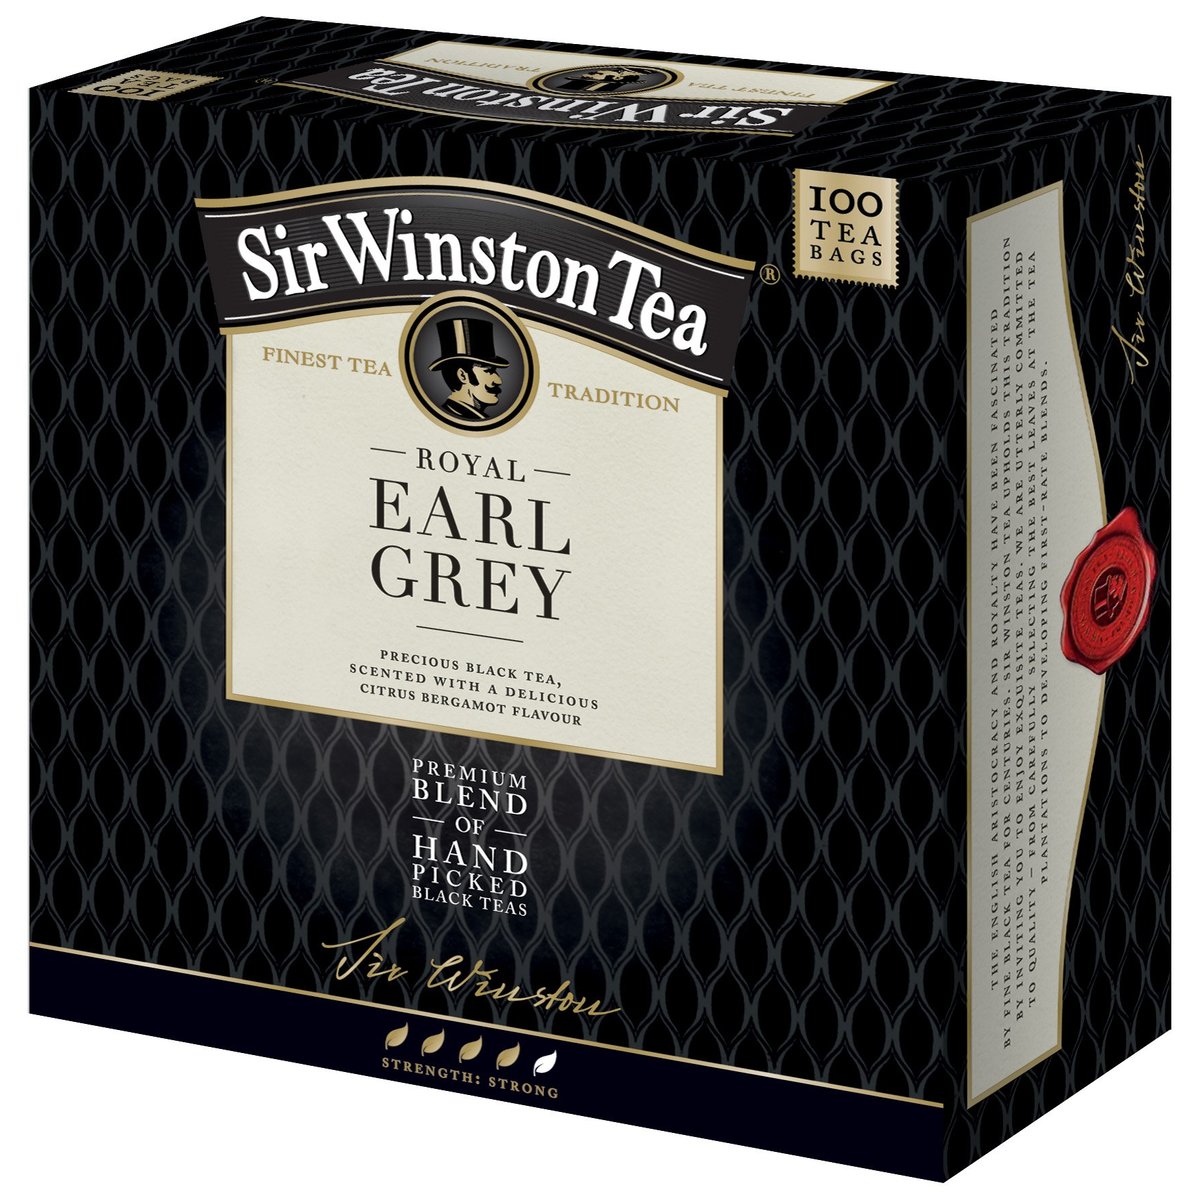 Sir Winston Tea Royal Earl grey